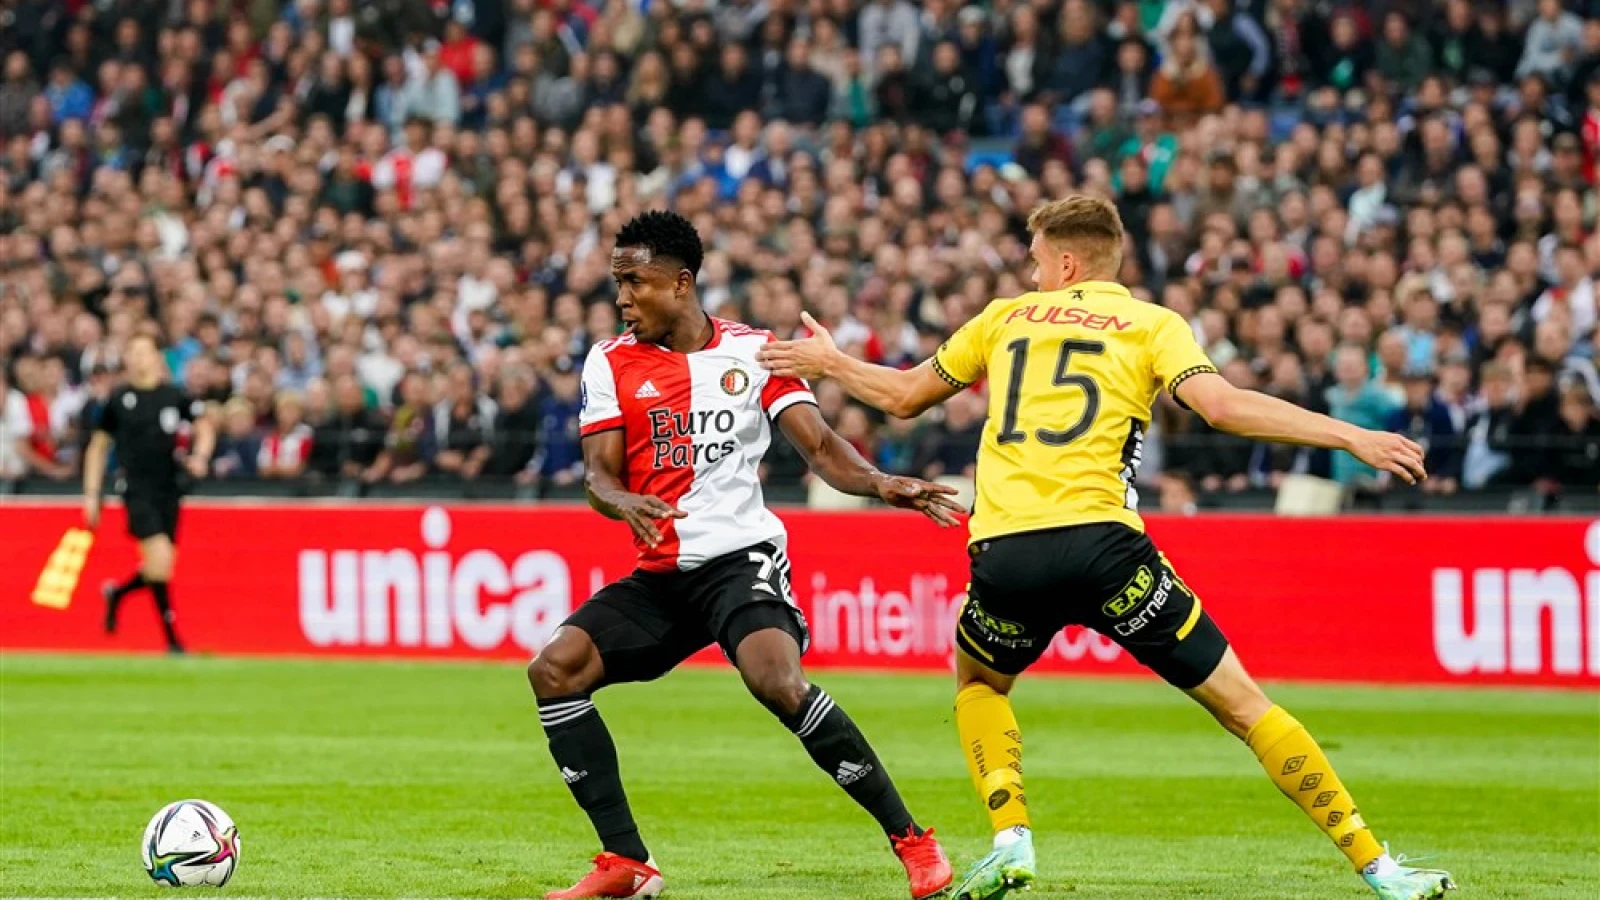 LIVE | Feyenoord - IF Elfsborg 5-0 | Einde wedstrijd